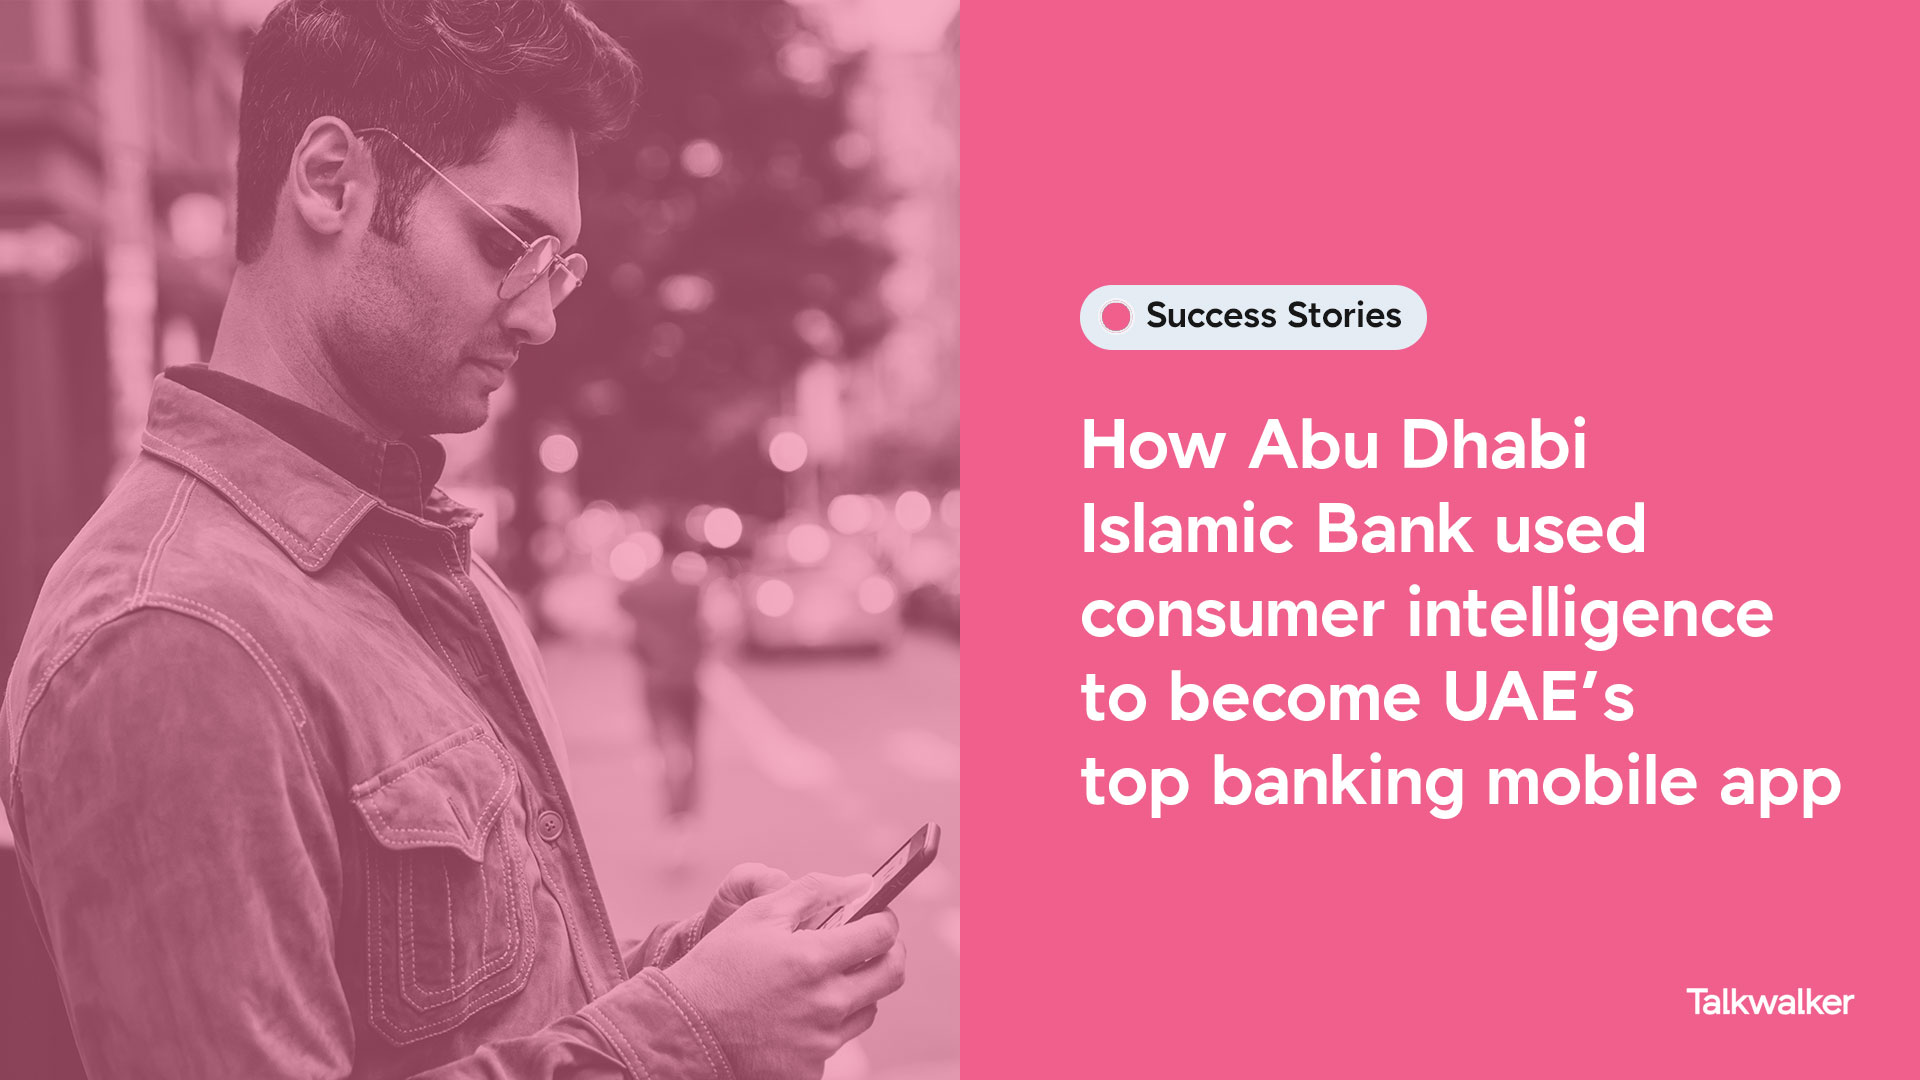 How Abu Dhabi Islamic Bank (ADIB) used consumer intelligence to become UAE’s top banking mobile app